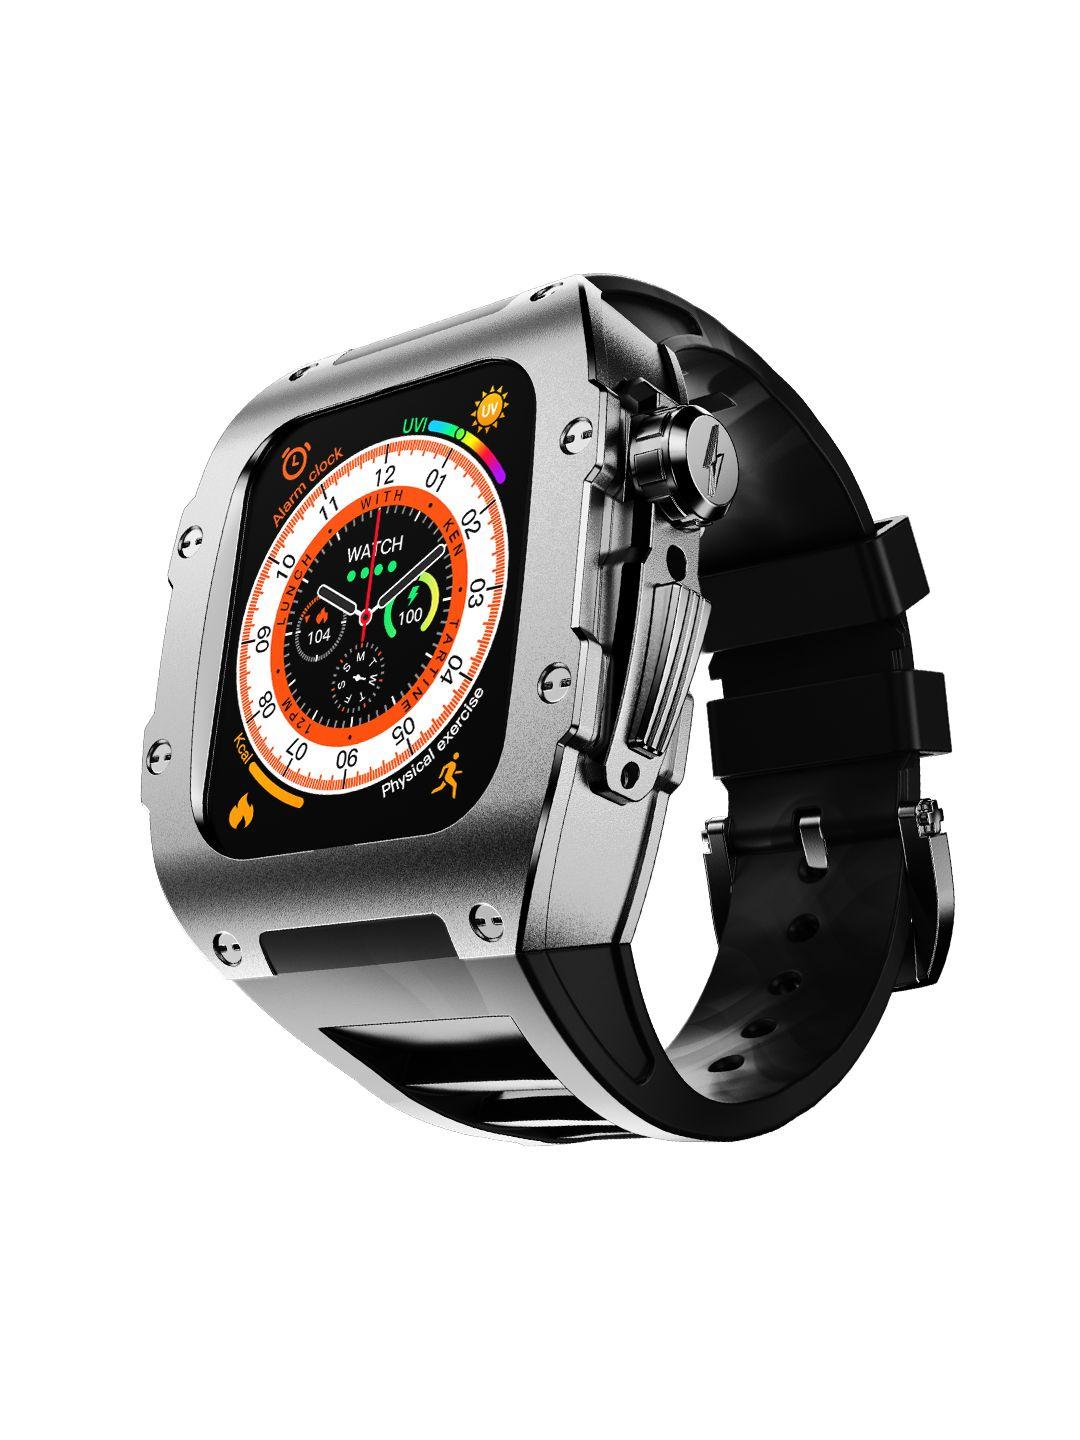 fire-boltt huracan 1.95" giant ips display smartwatch with bt calling